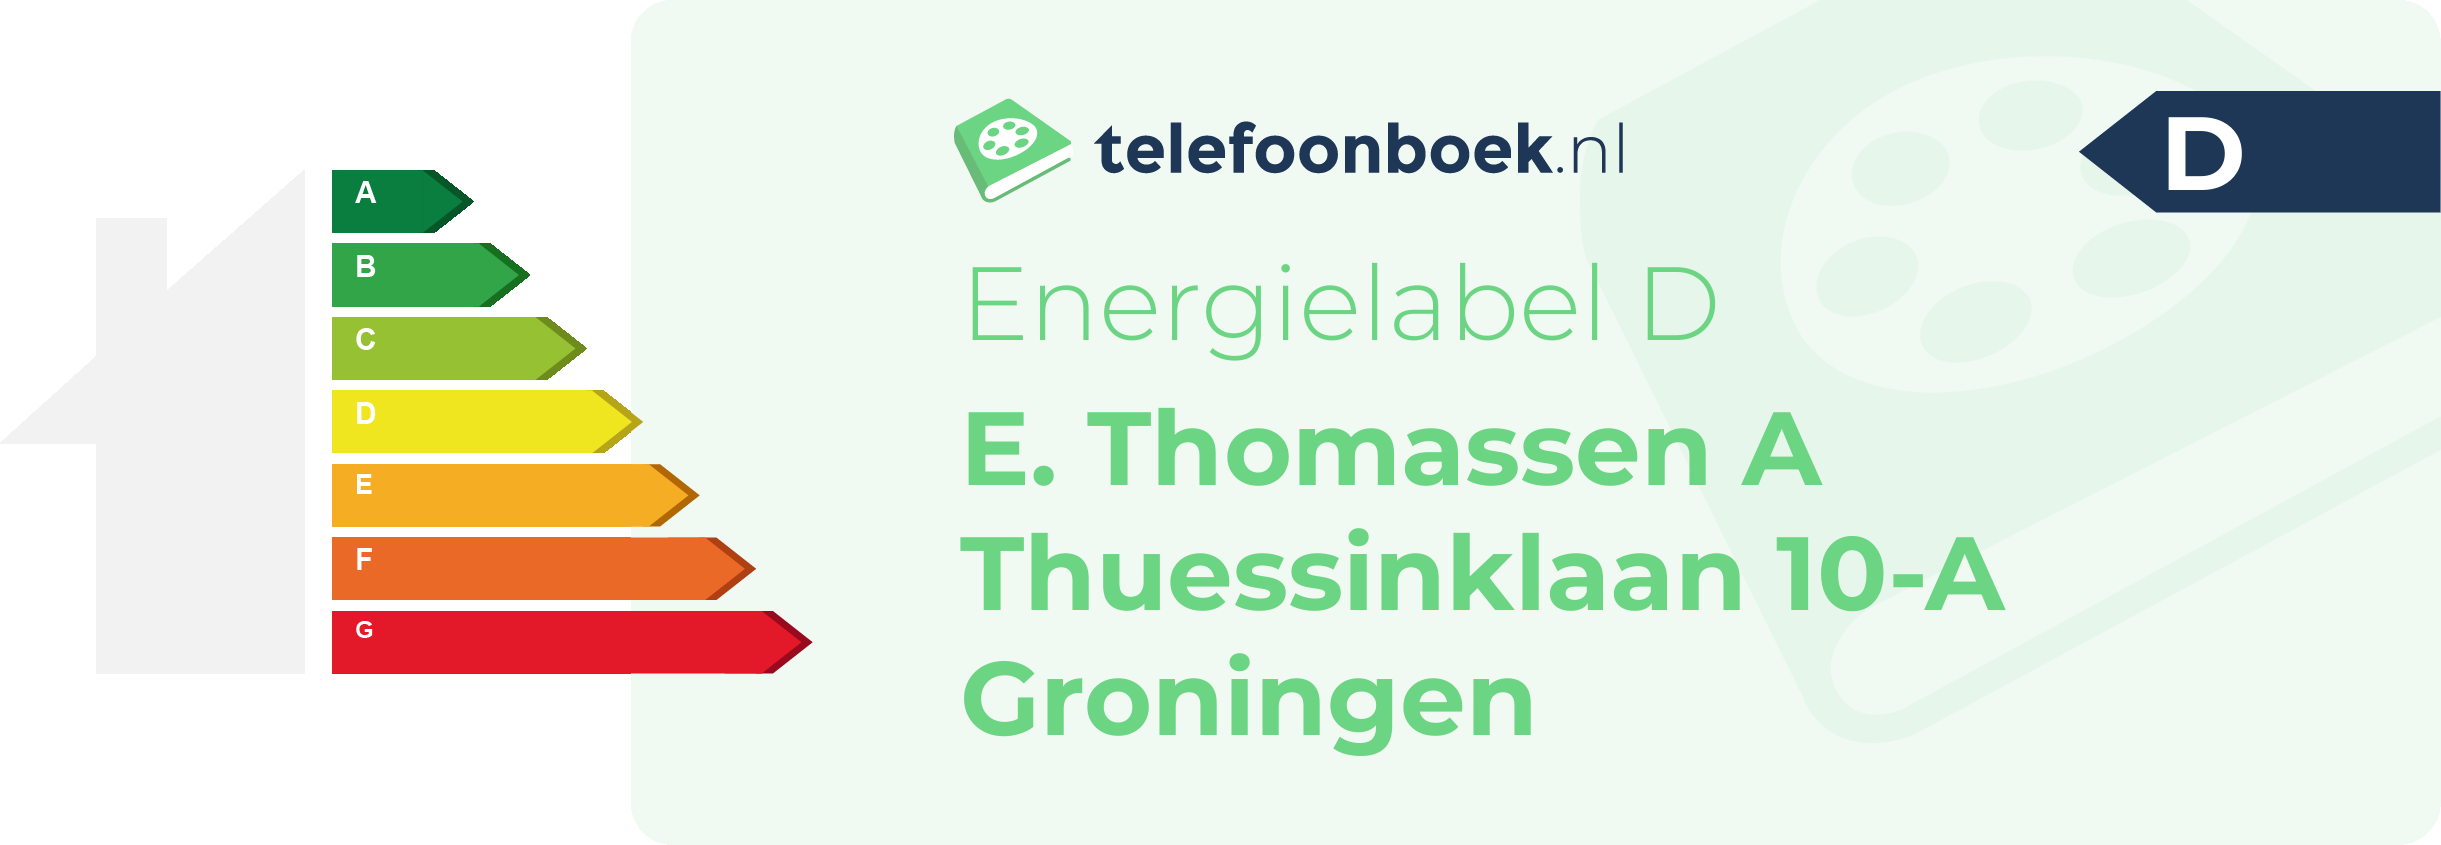 Energielabel E. Thomassen A Thuessinklaan 10-A Groningen